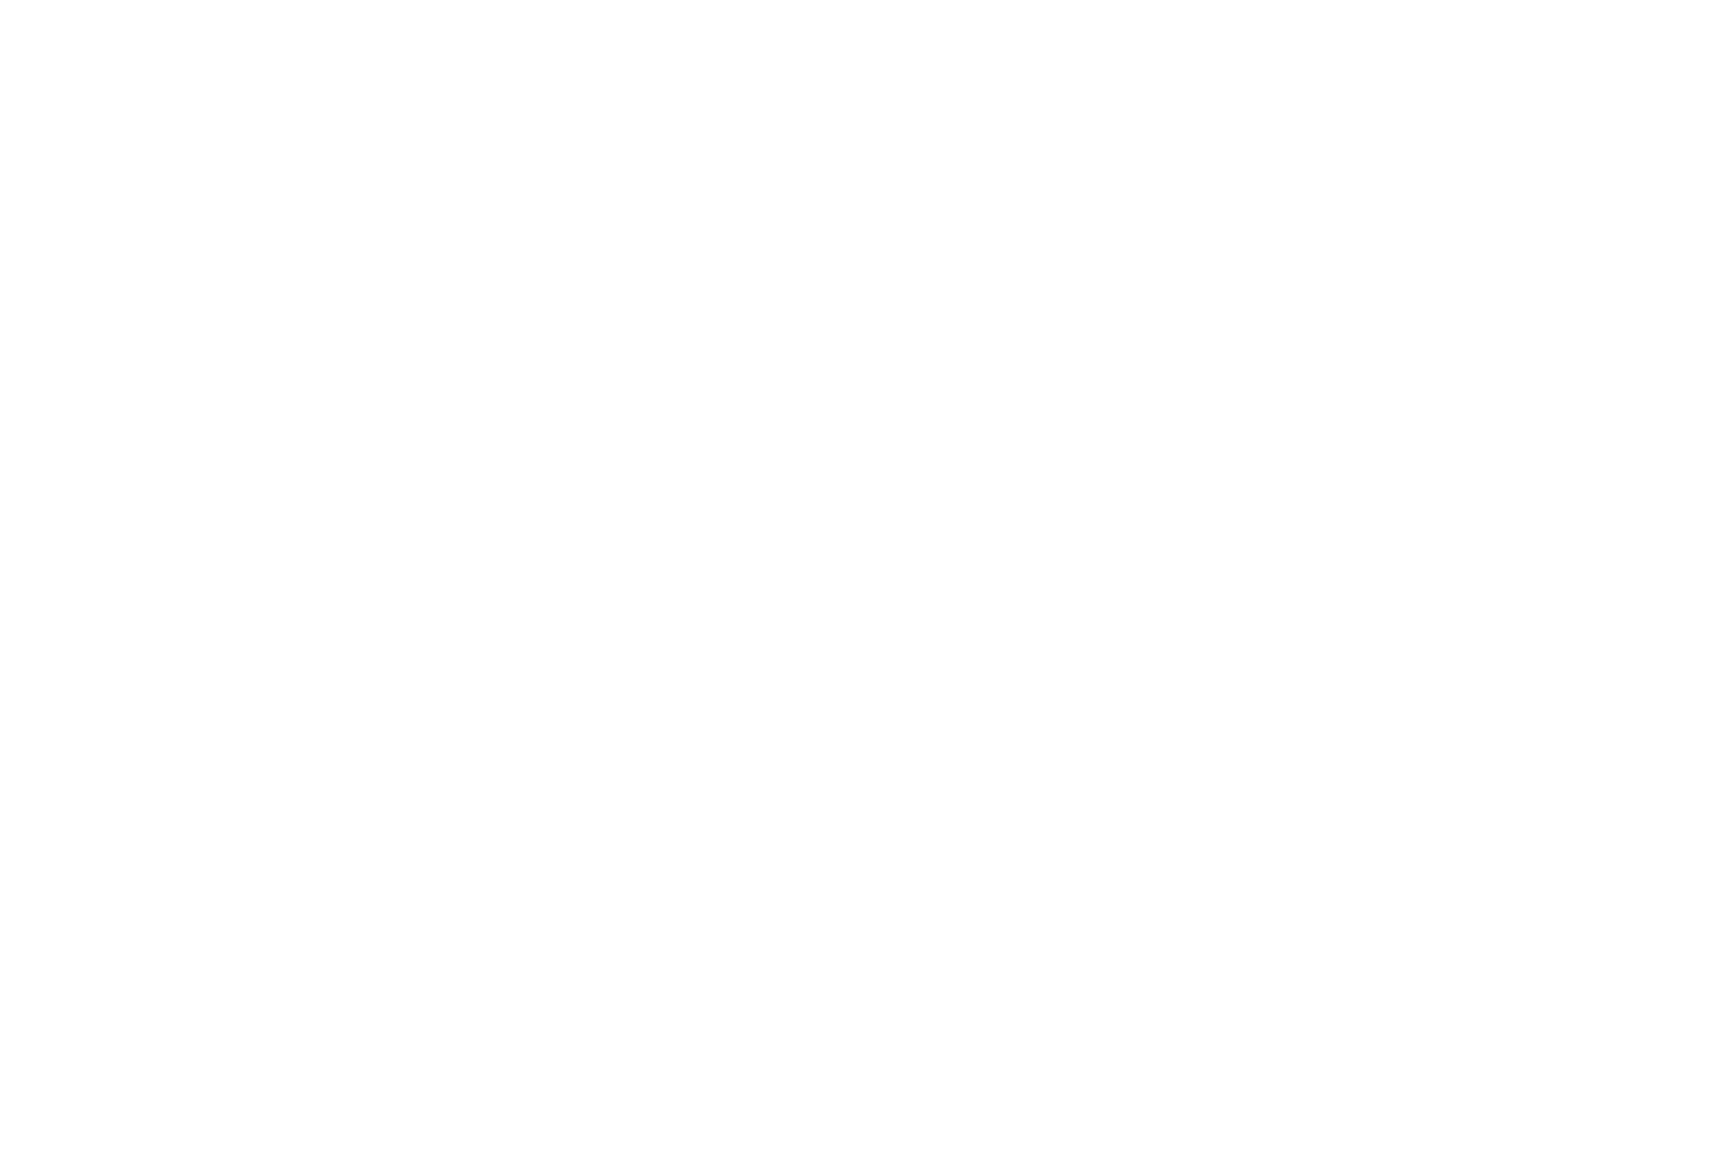 WINNER - NIAF GRANT AWARD - 2019 (1).png